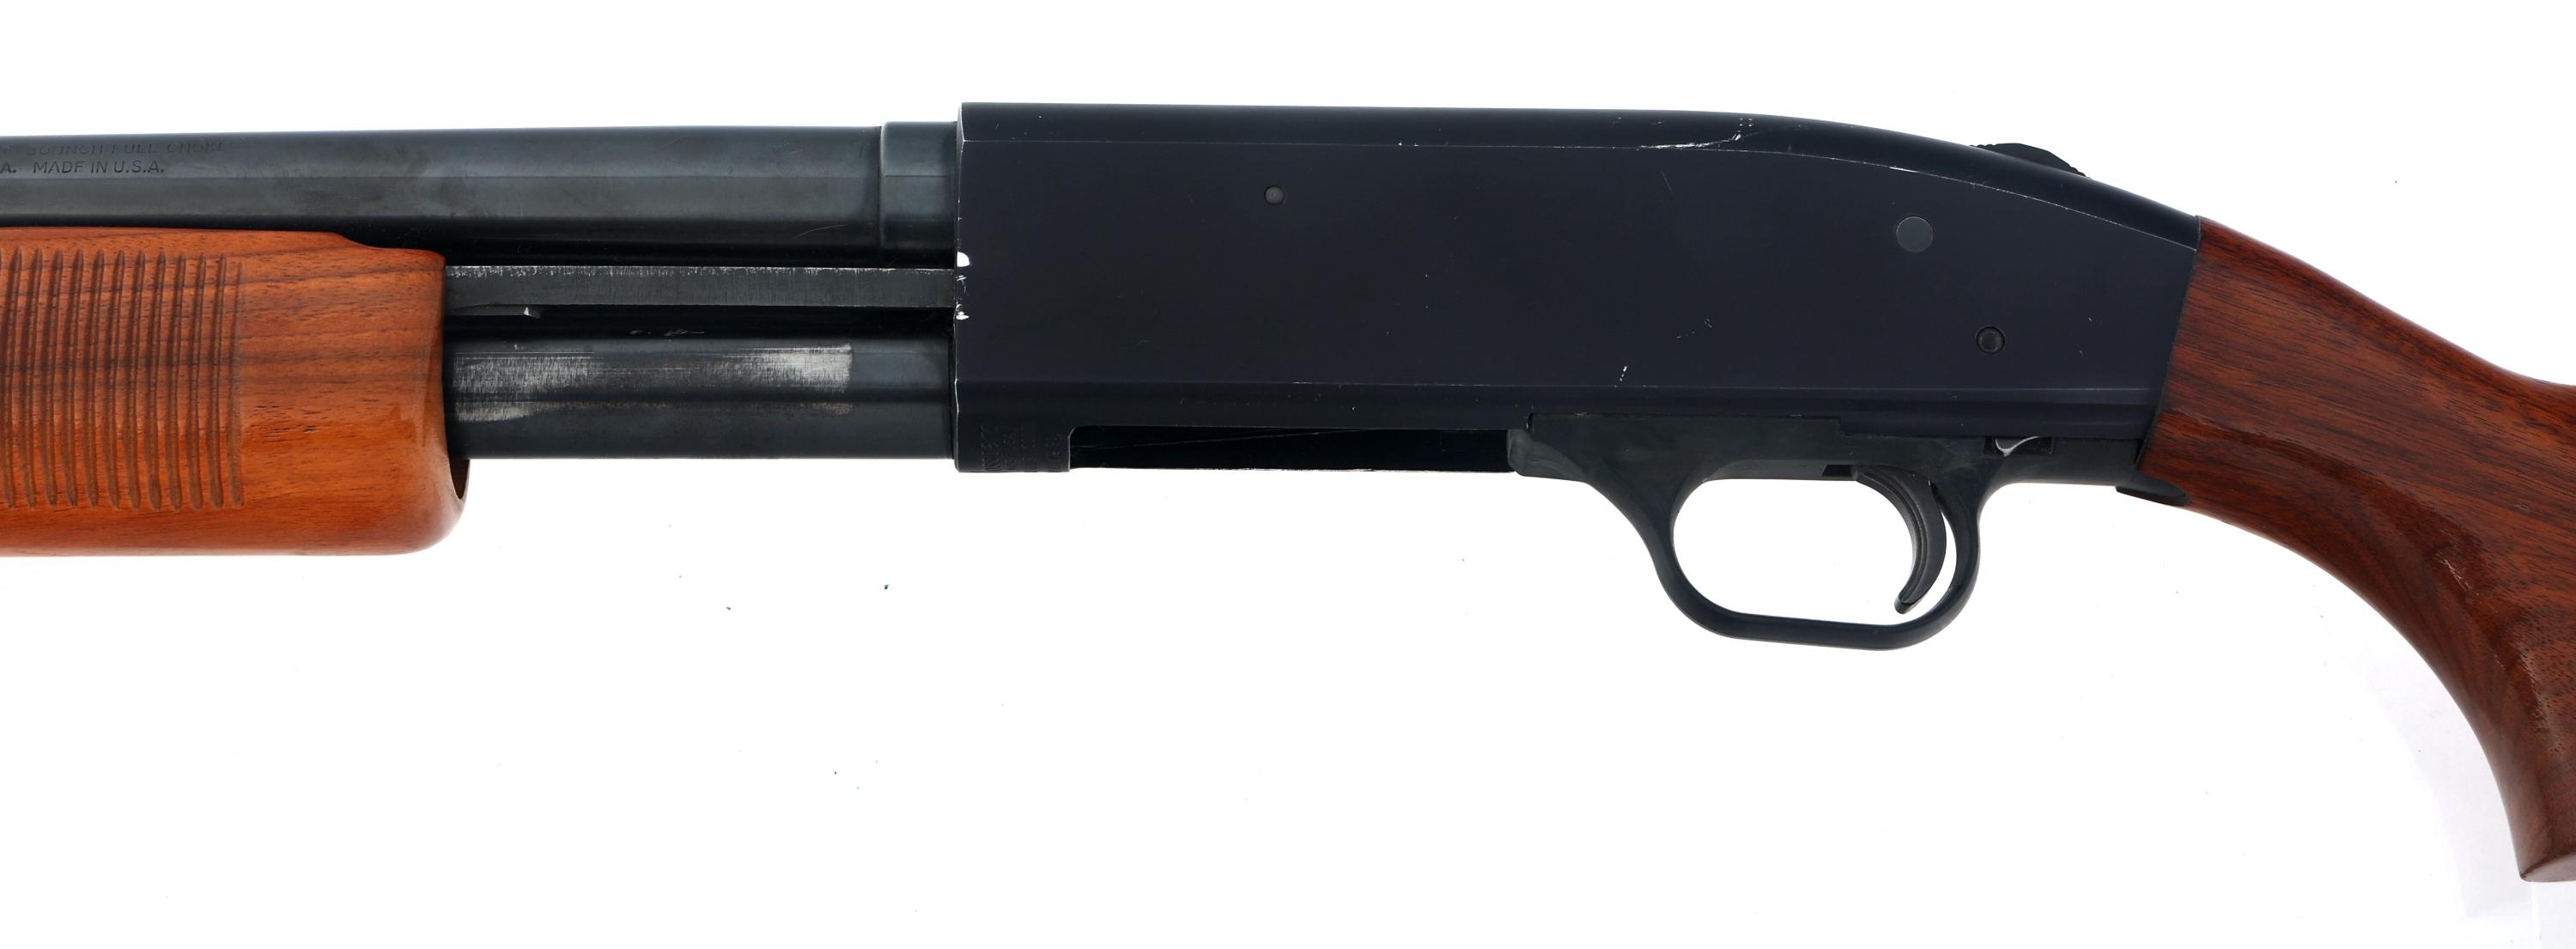 MOSSBERG MODEL 500A 12 GAUGE SHOTGUN